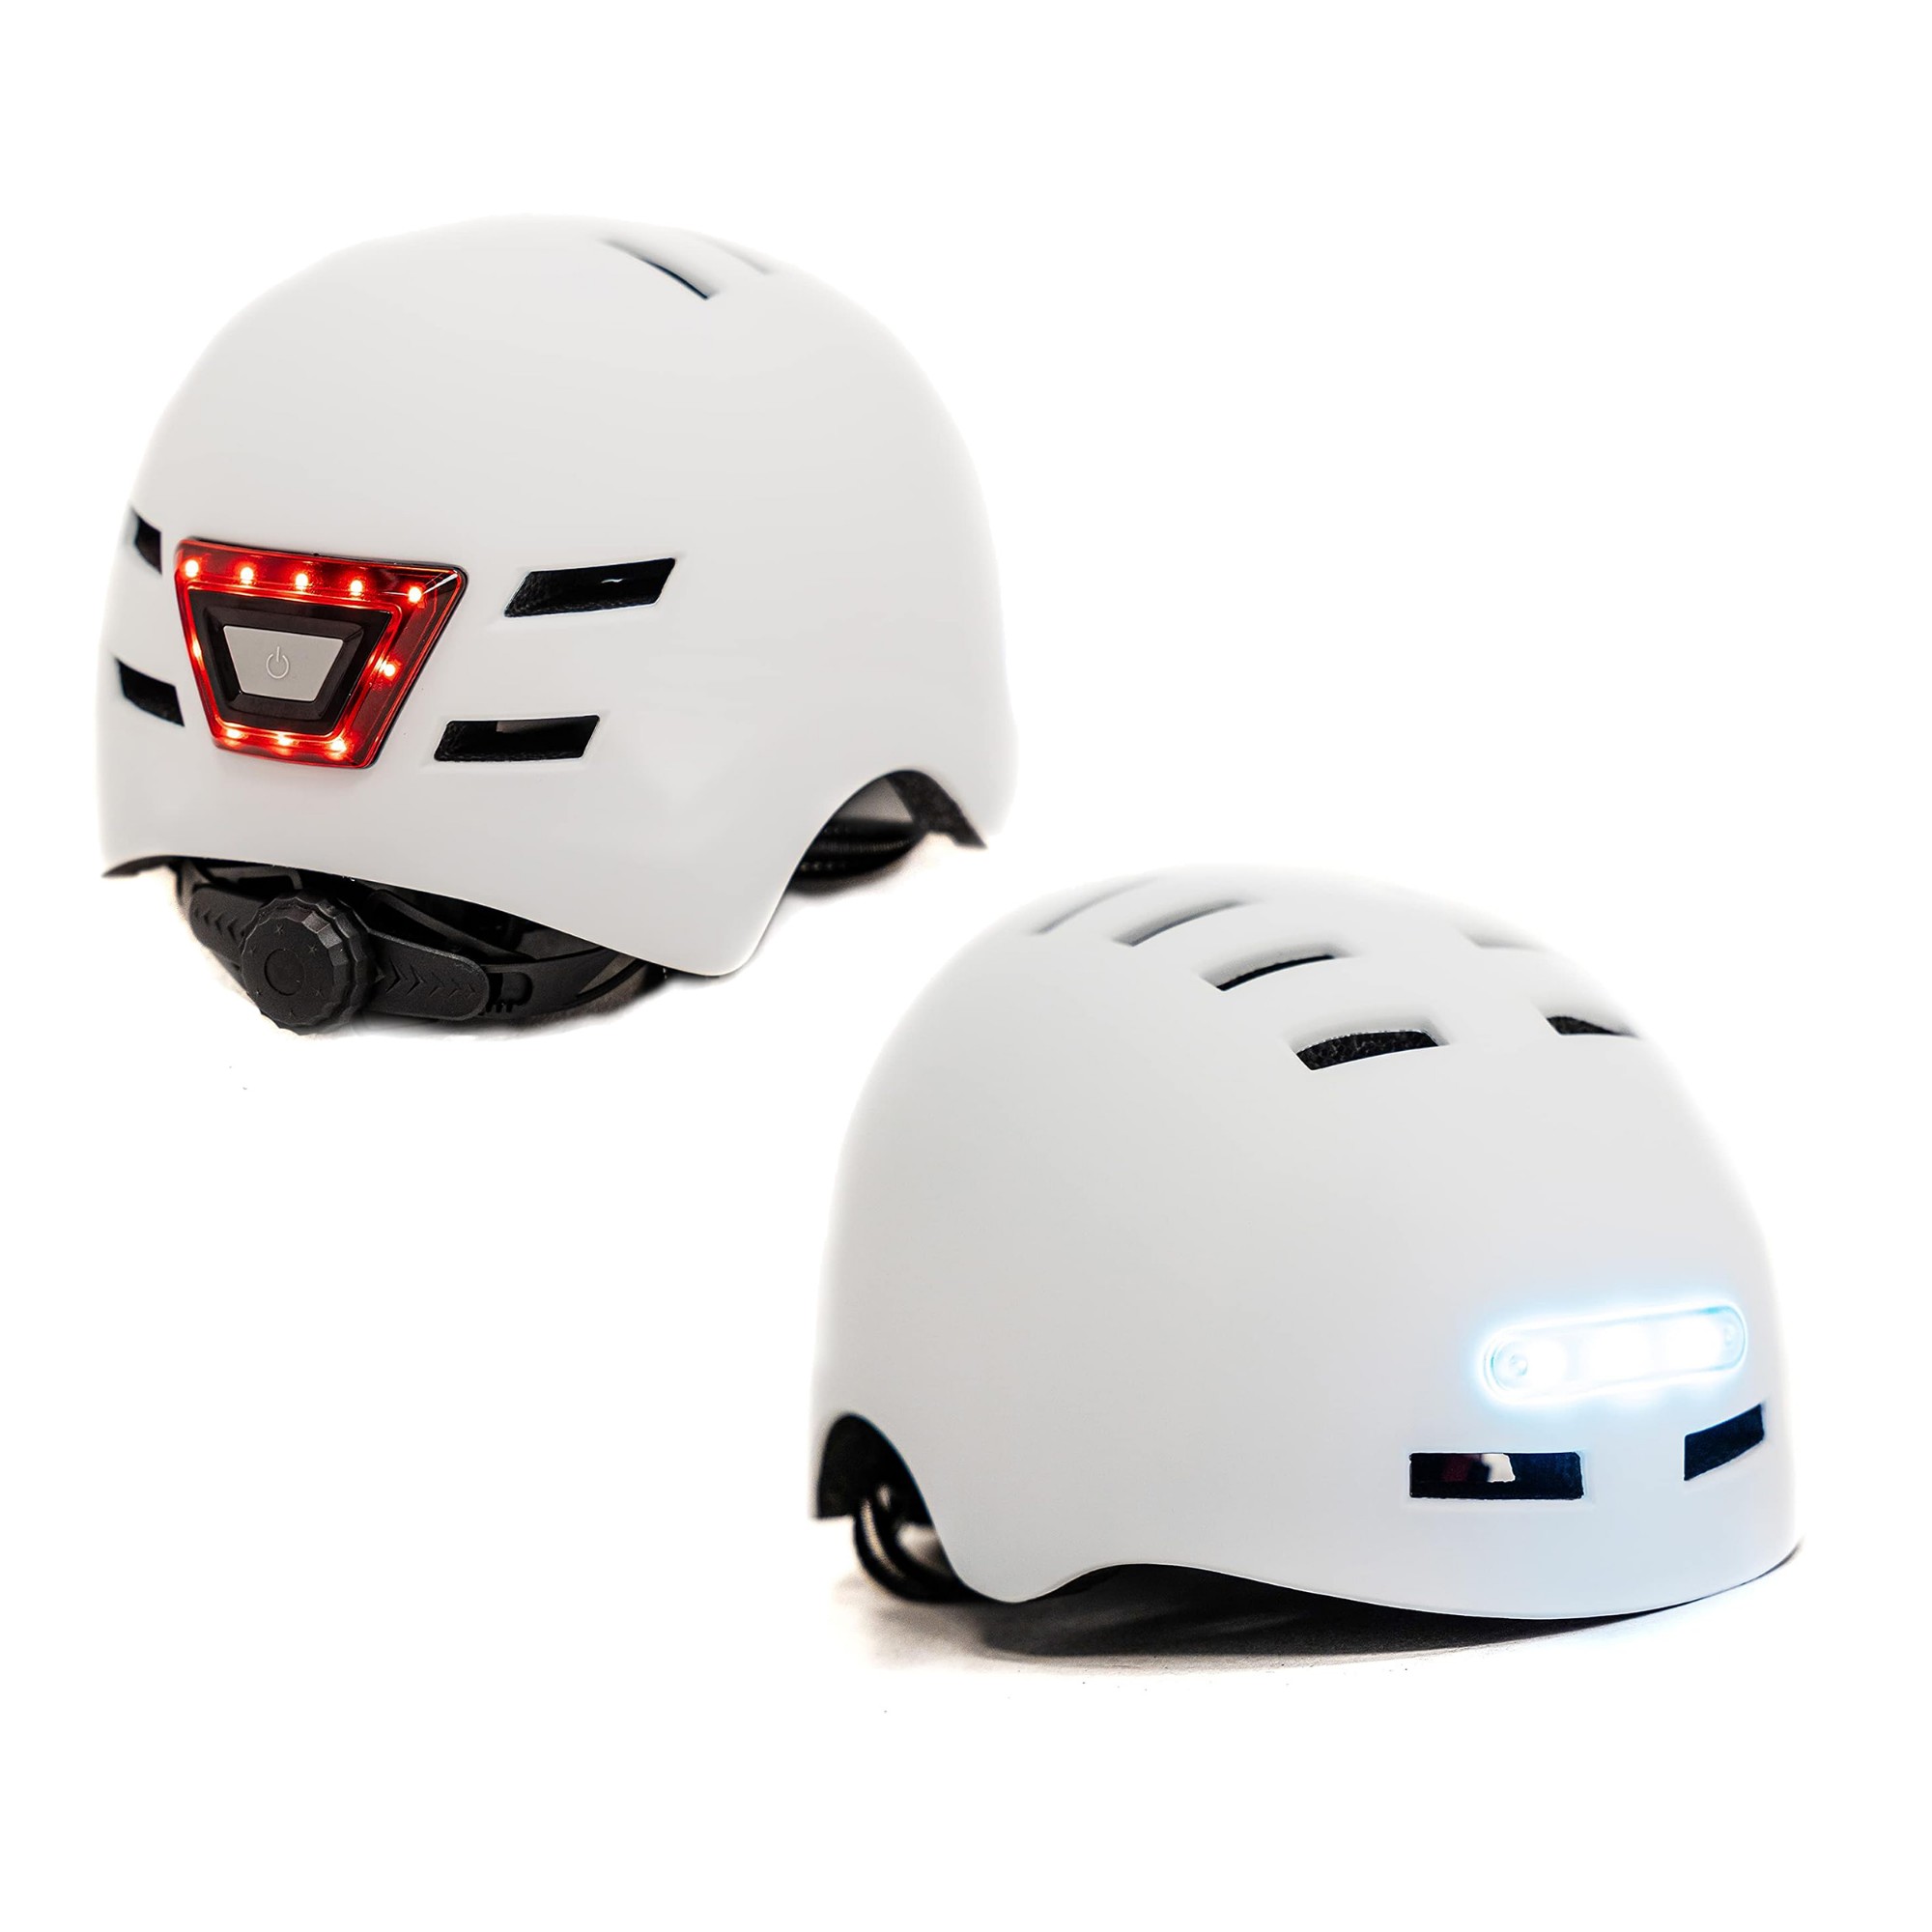 KY-Z002-LARGEWHITE BUSBI Firefly Adult Helmet - Large White